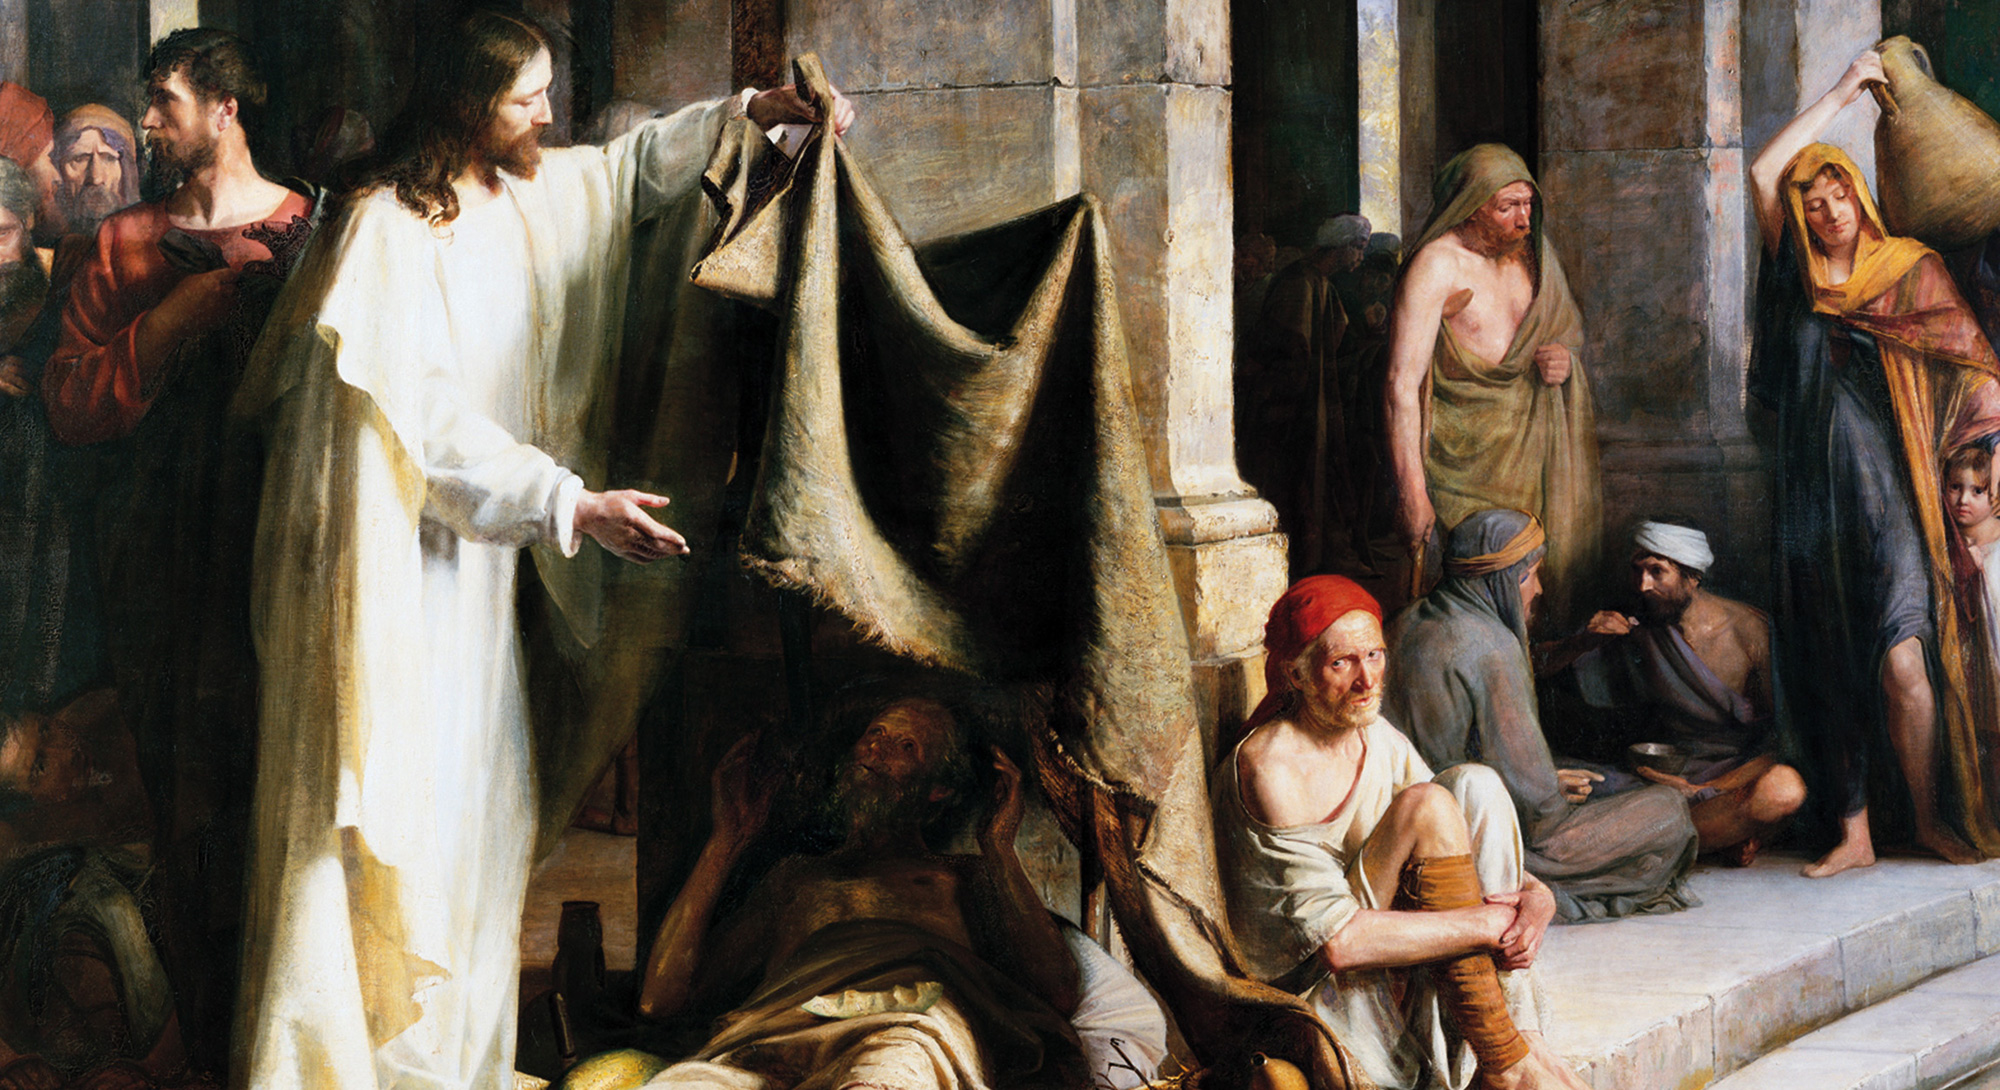 Jesus Heals the Sick by Carl Bloch